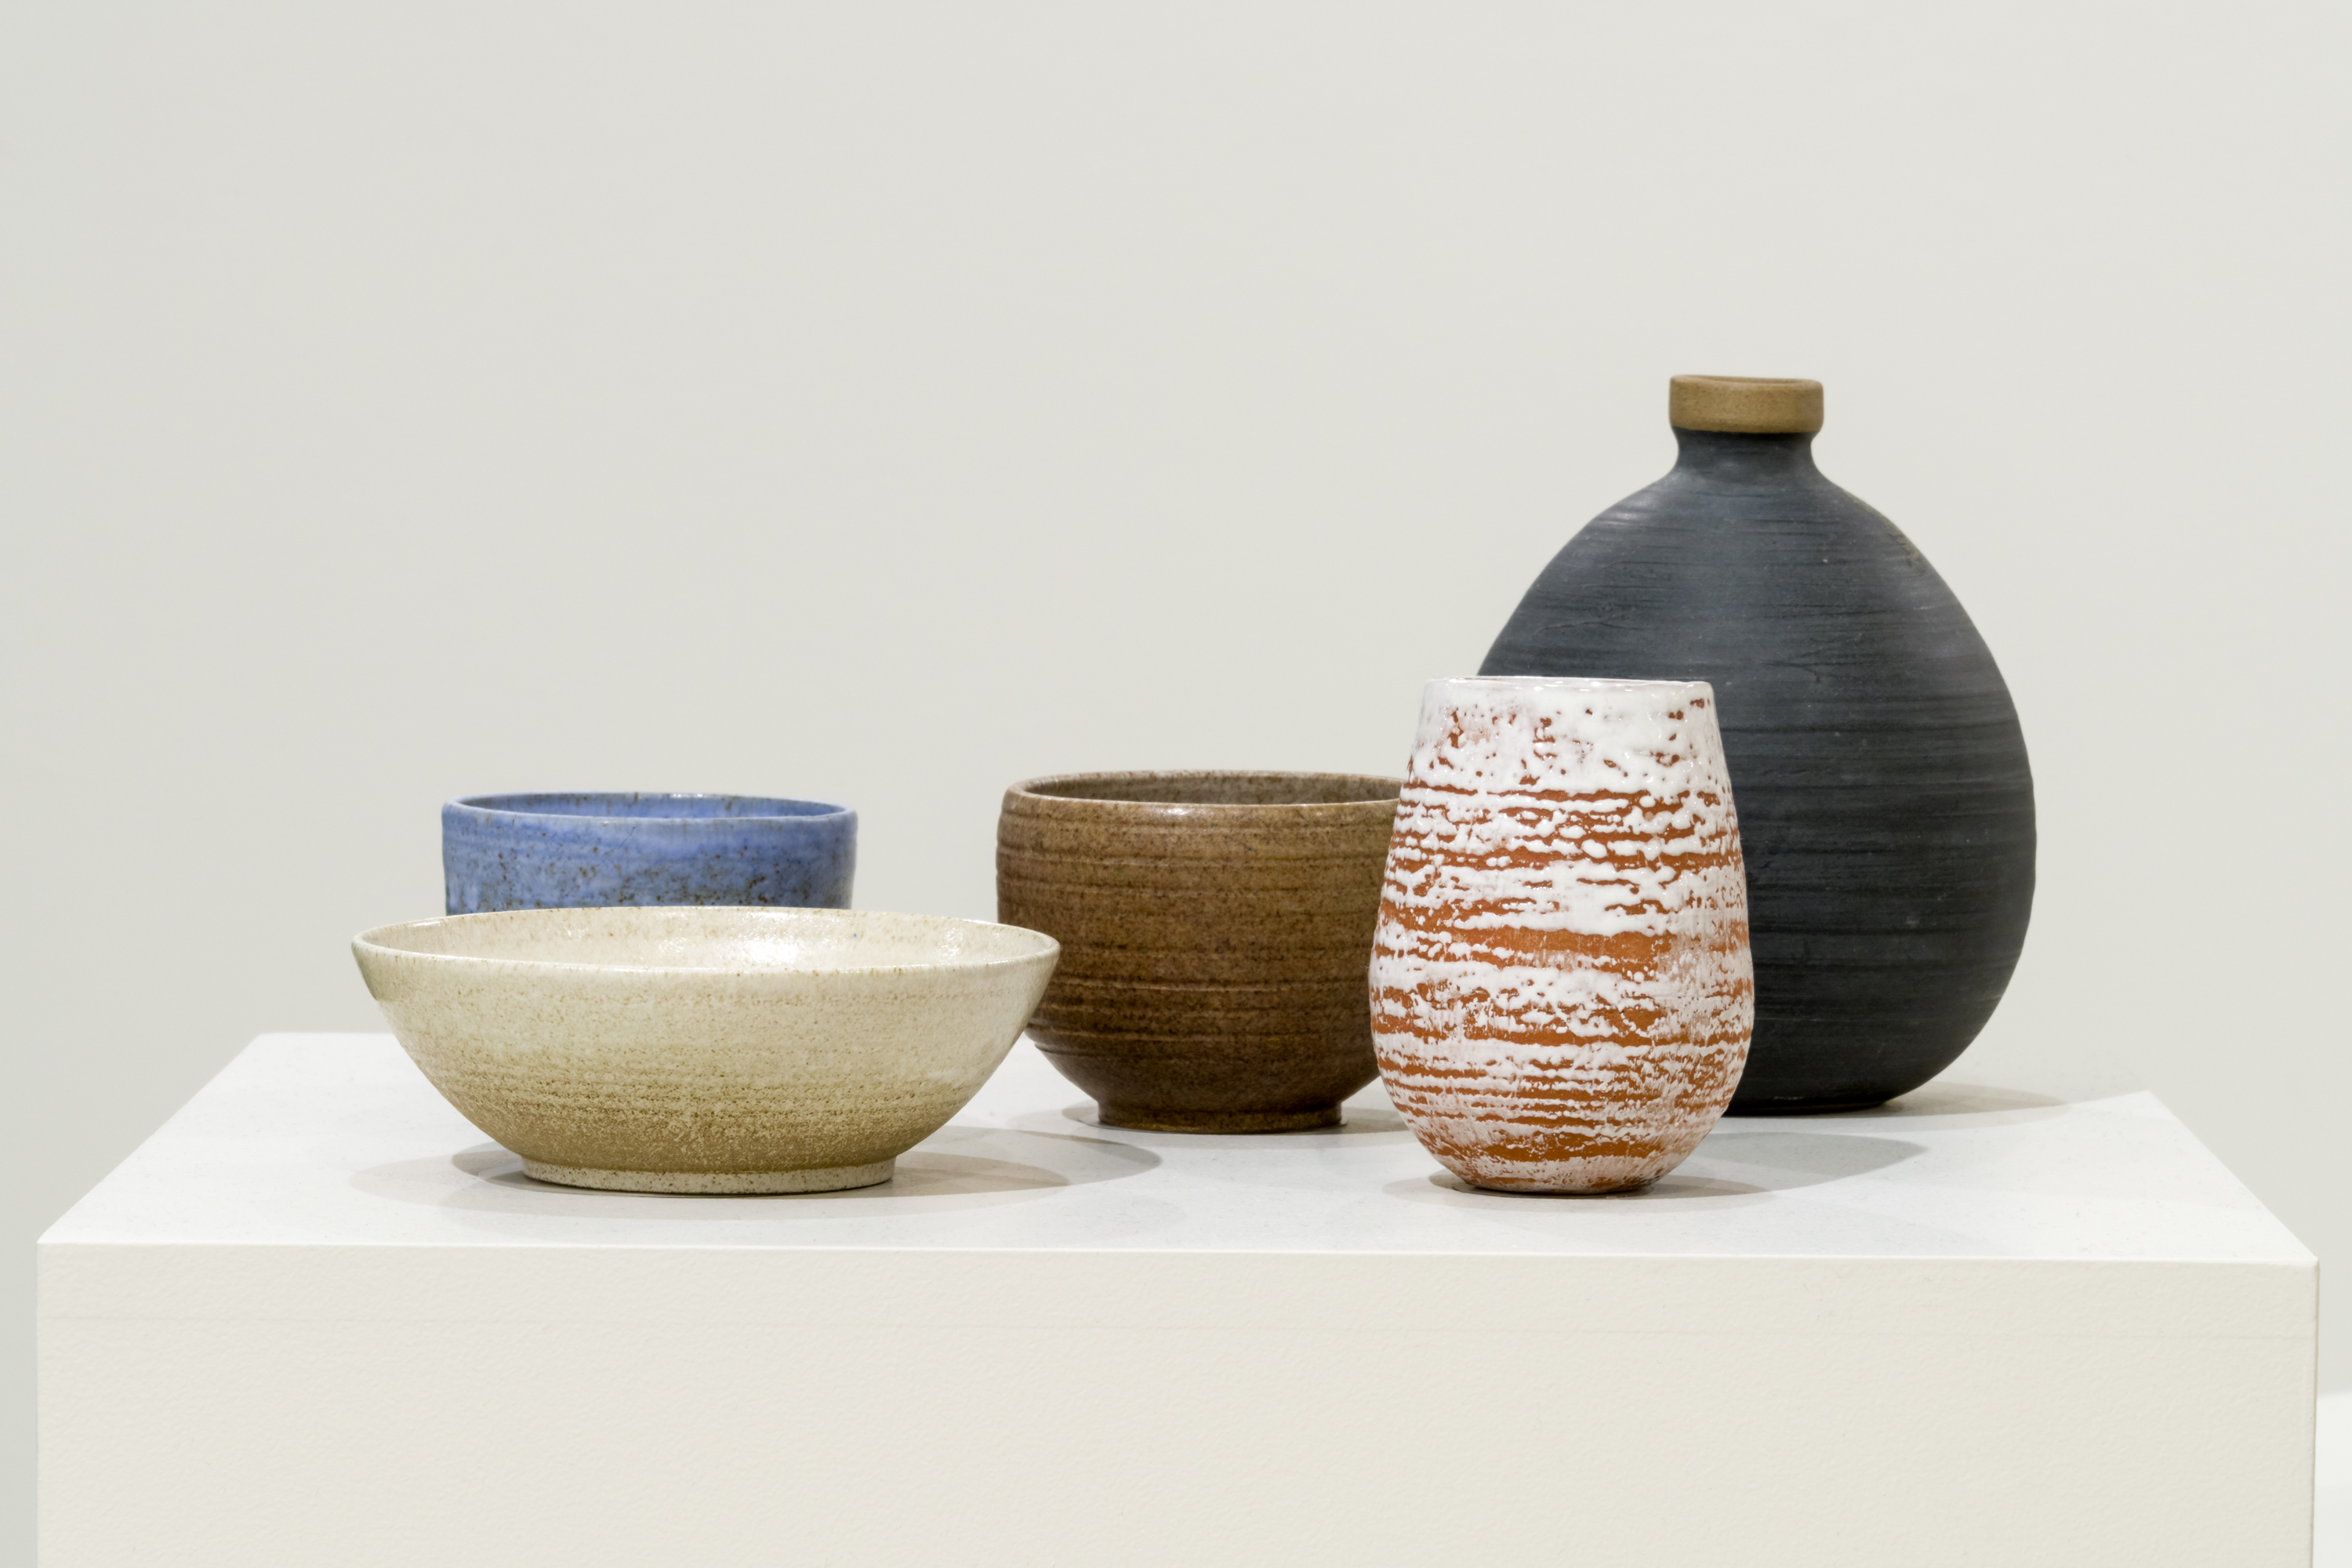 Closeup of ceramic bowls and vases.